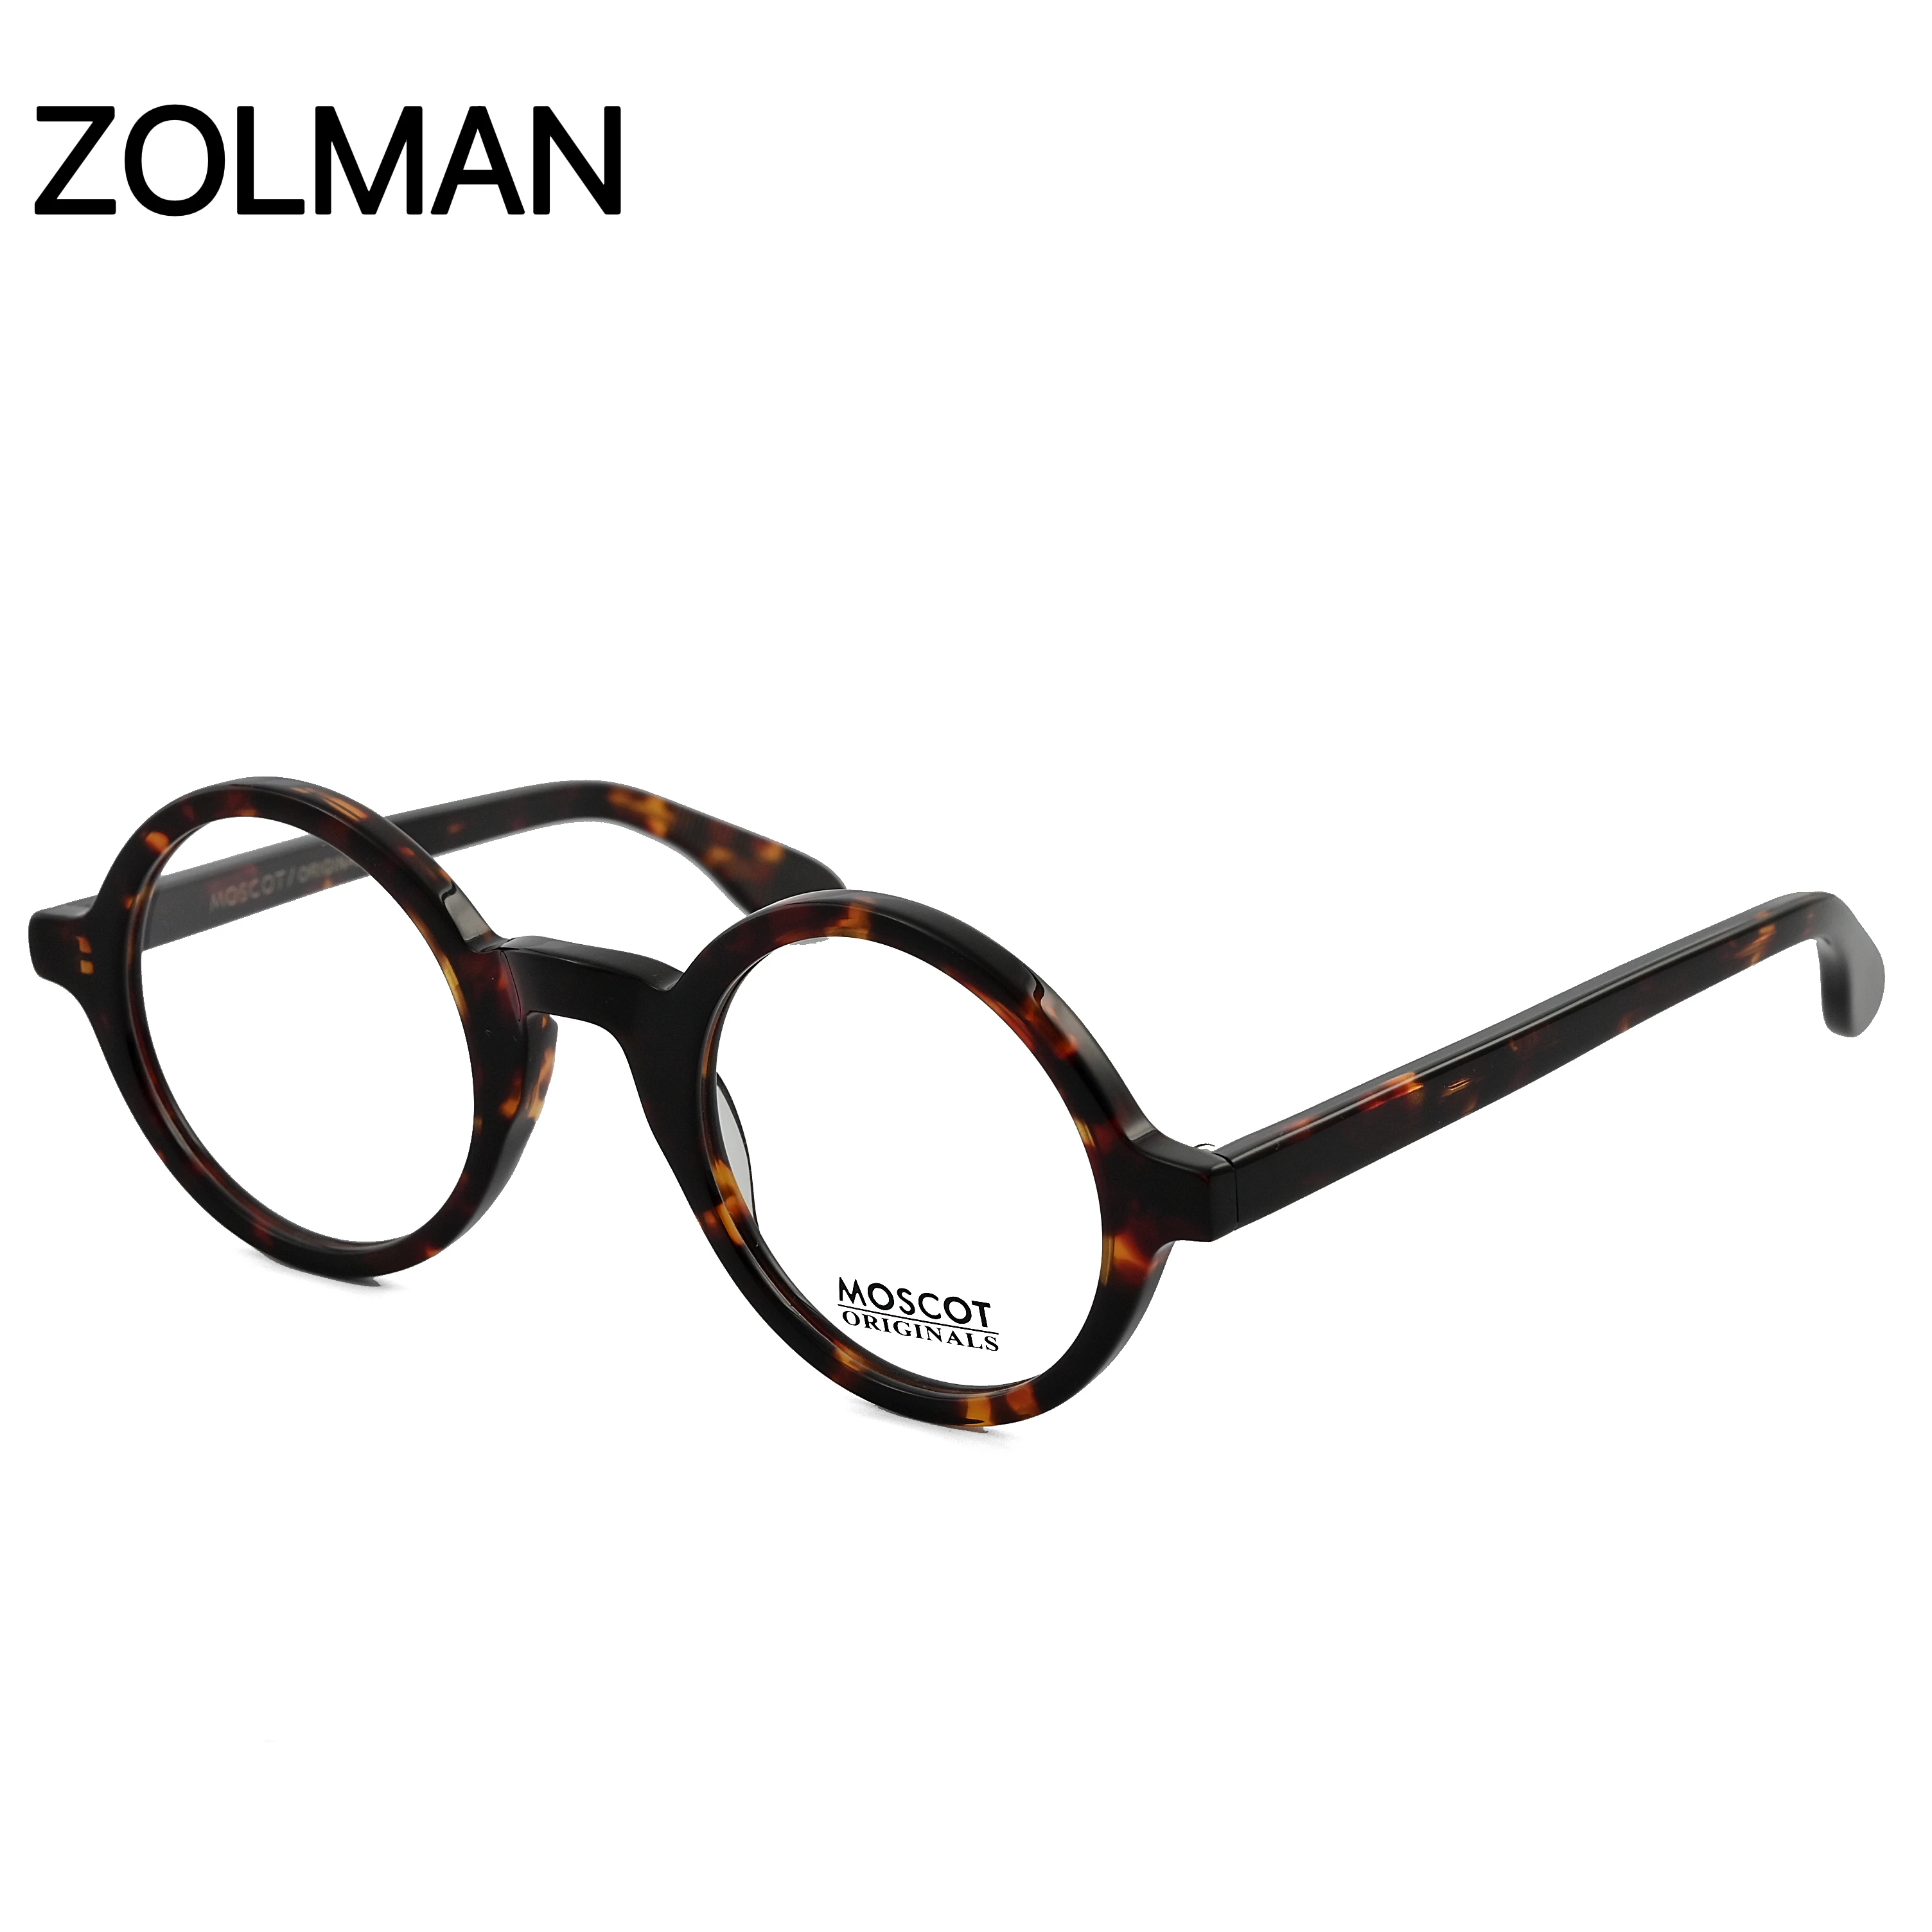 

American Brand MOSCOT ZOLMAN Johnny Depp Round Clear Lens Men Eyeglasses Frame Formal Women Sun Glasses With Original Box